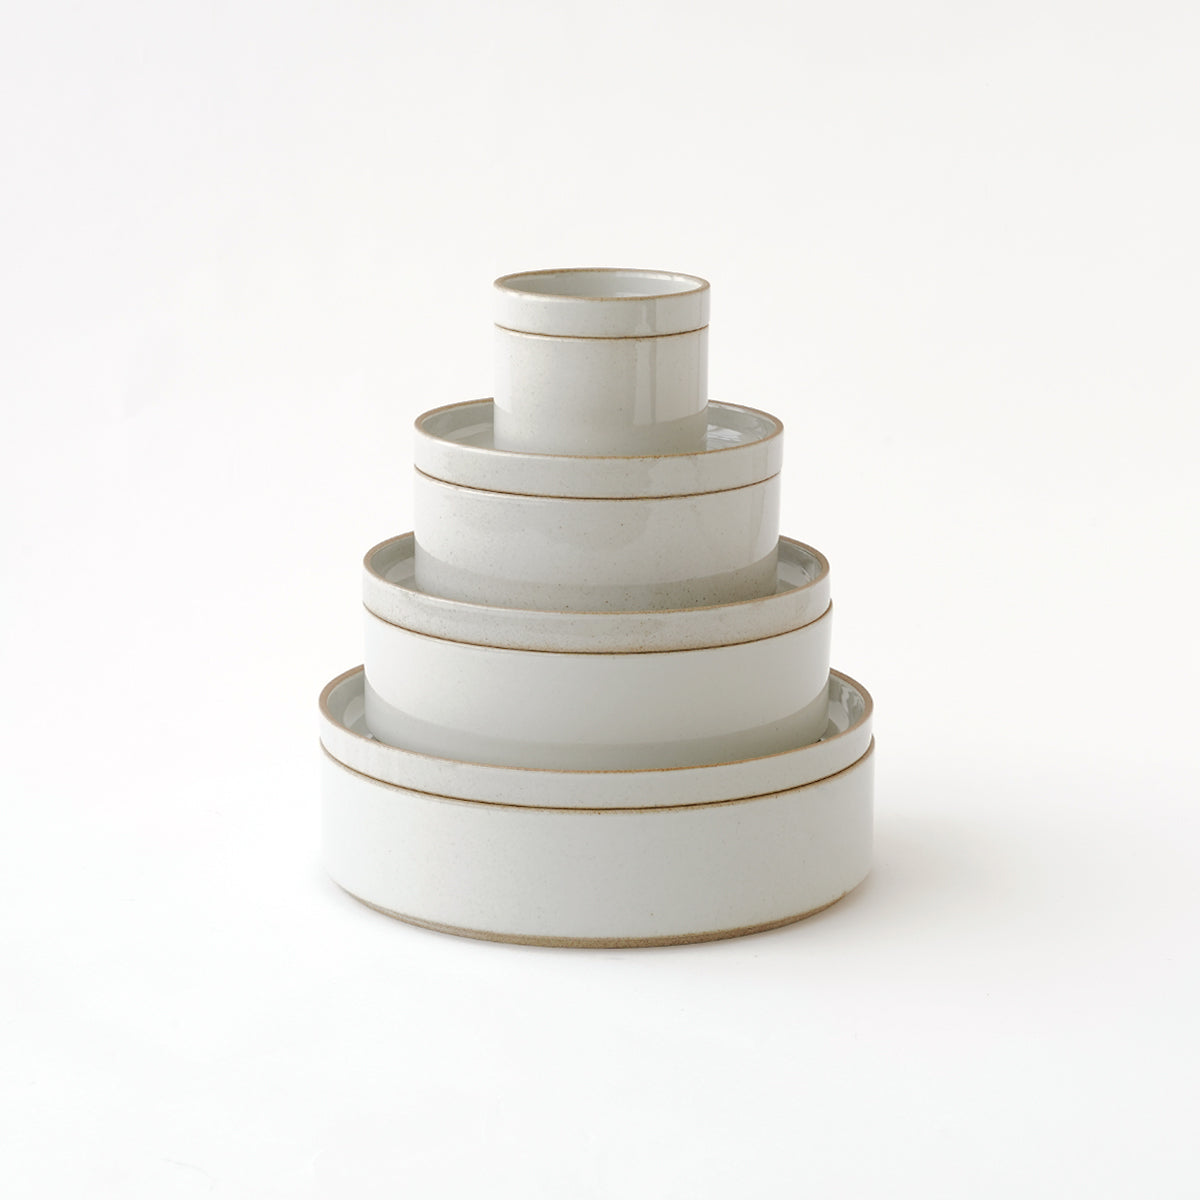 Hasami Porcelain Plate 10" Gloss Gray